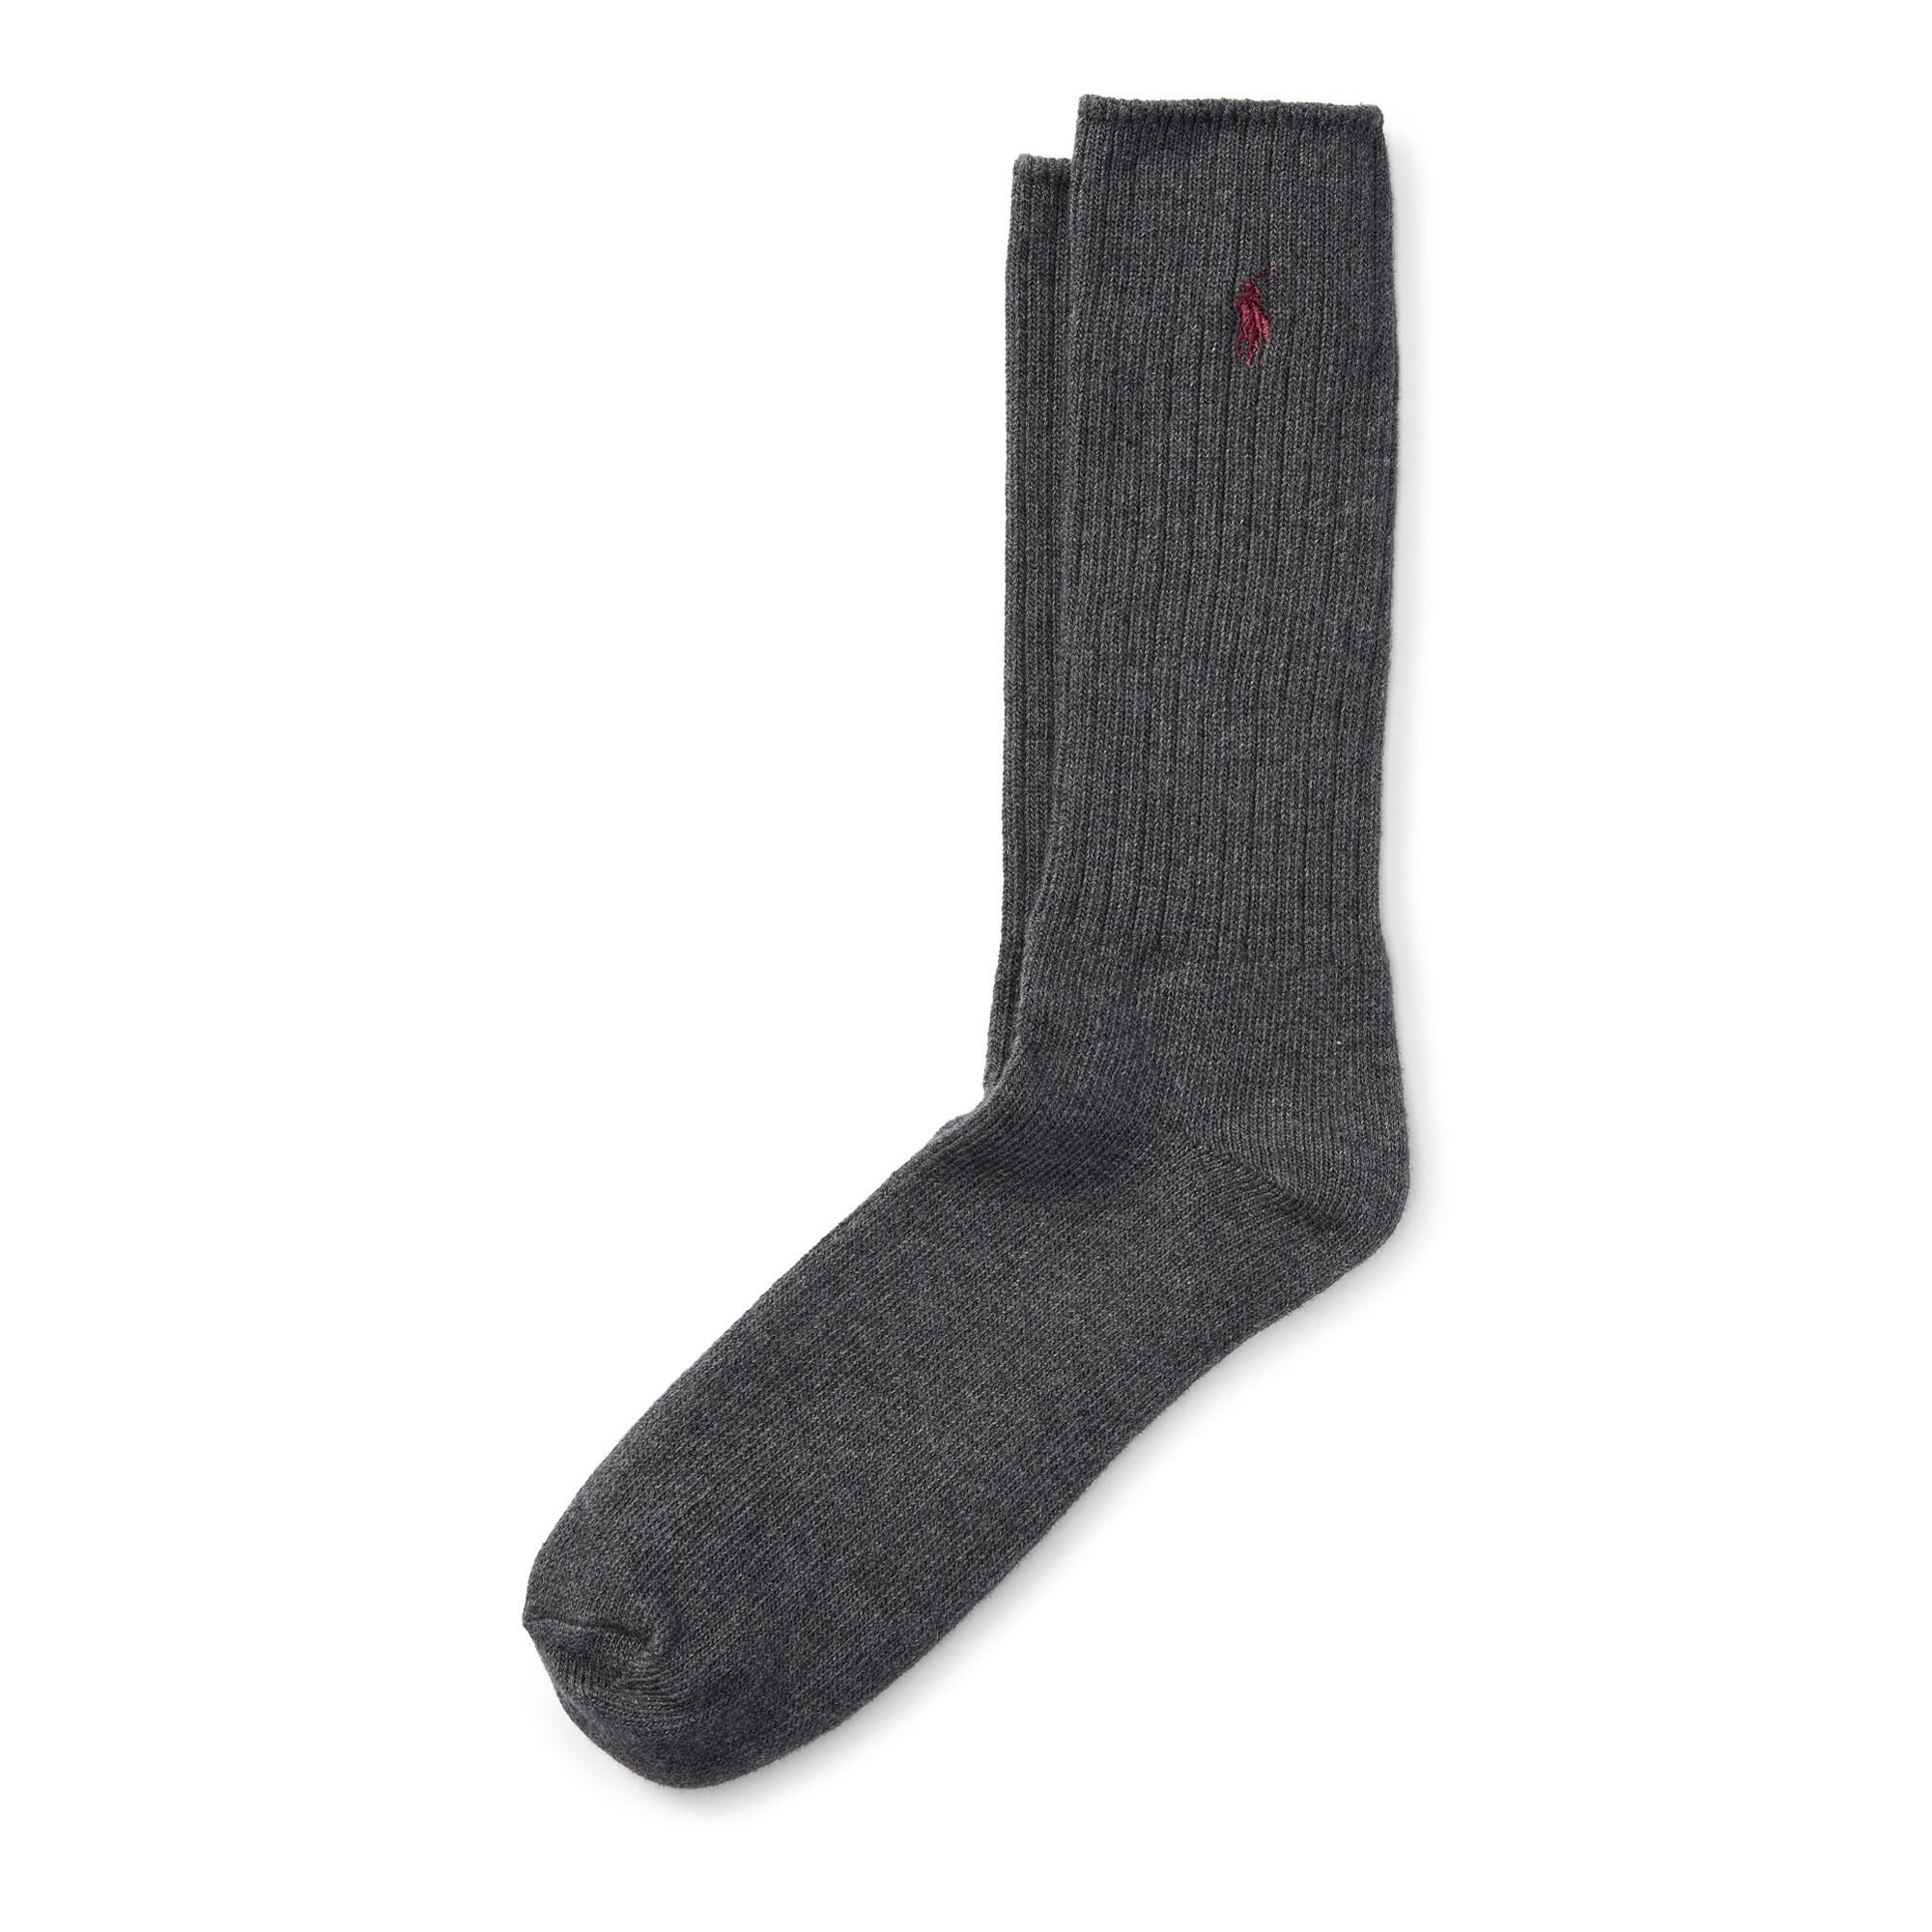 Polo Ralph Lauren Cotton-blend Crew Socks in Charcoal (Gray) for Men - Lyst